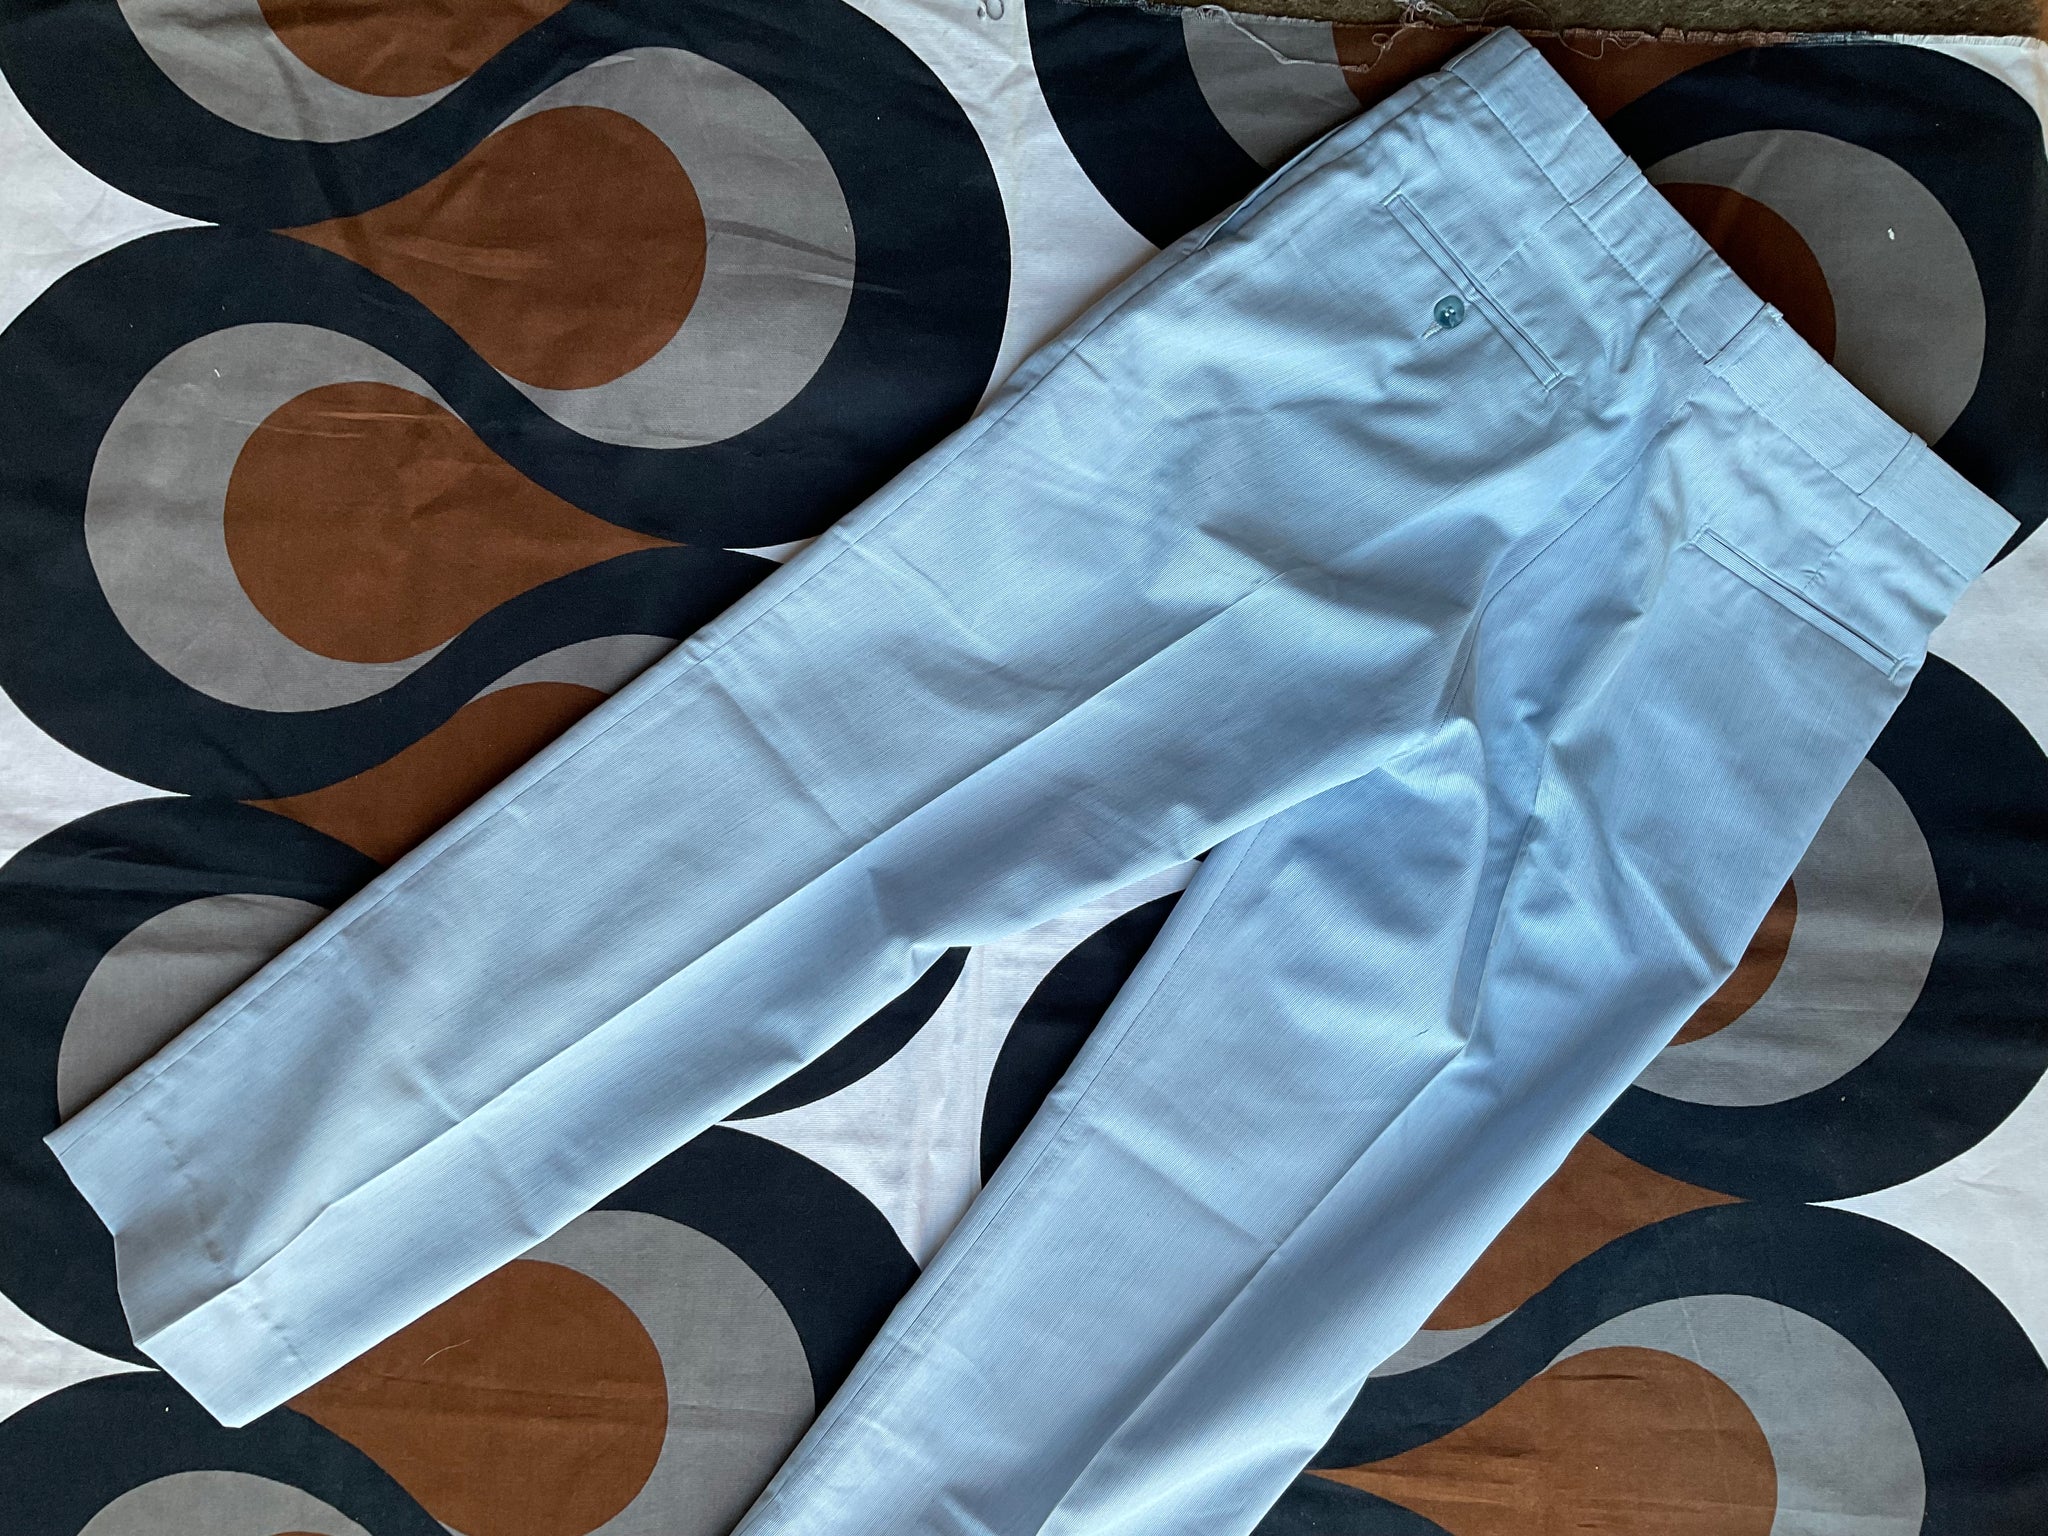 Farah Relaxed Trousers Navy 40x27 TD025 GG 10 | eBay